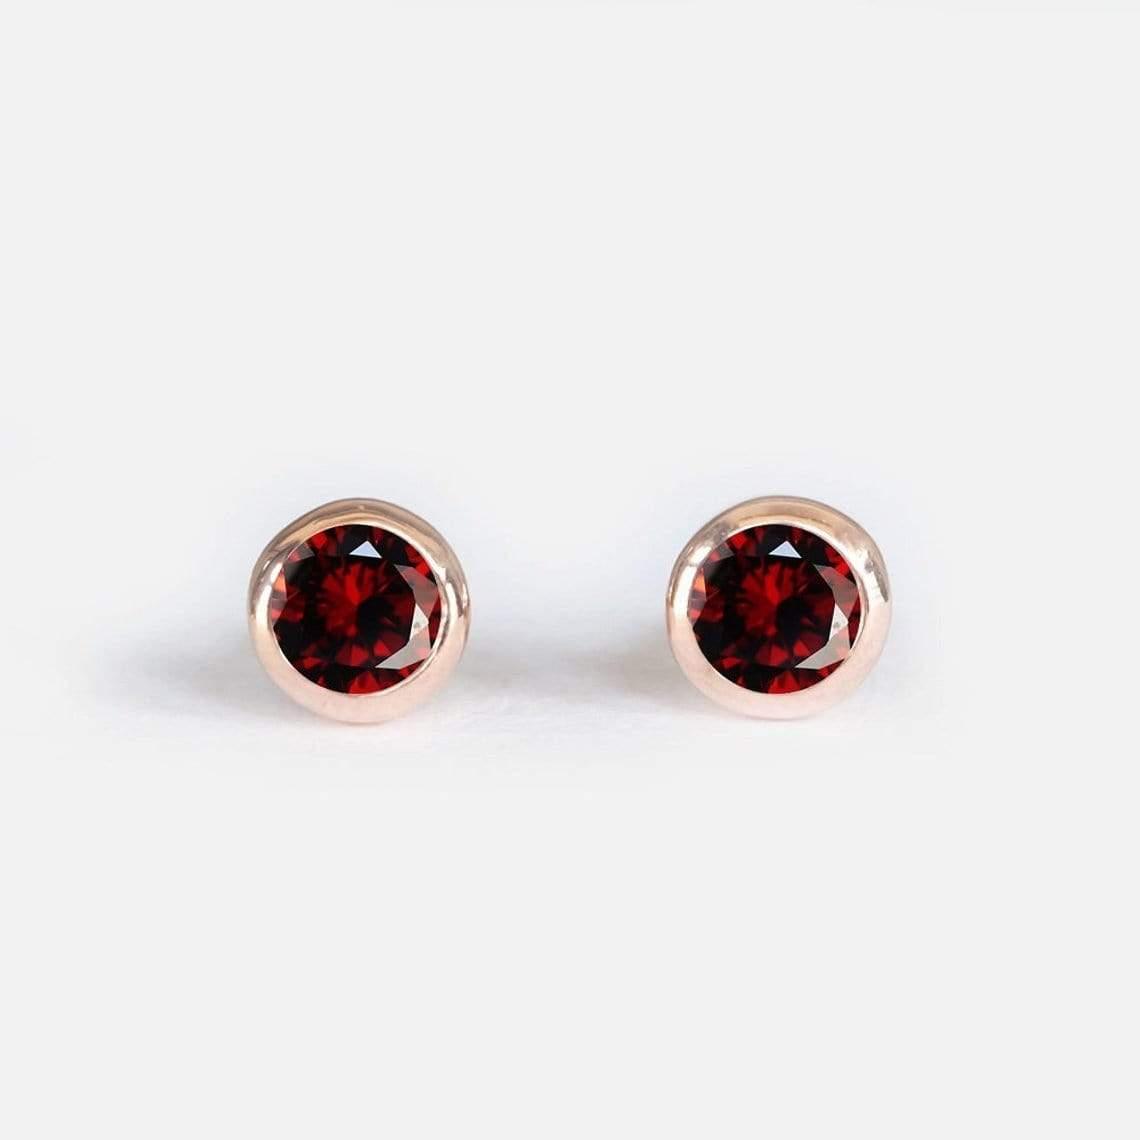 0.38 Carats 14k Solid Rose Gold Garnet Earrings - SOVATS